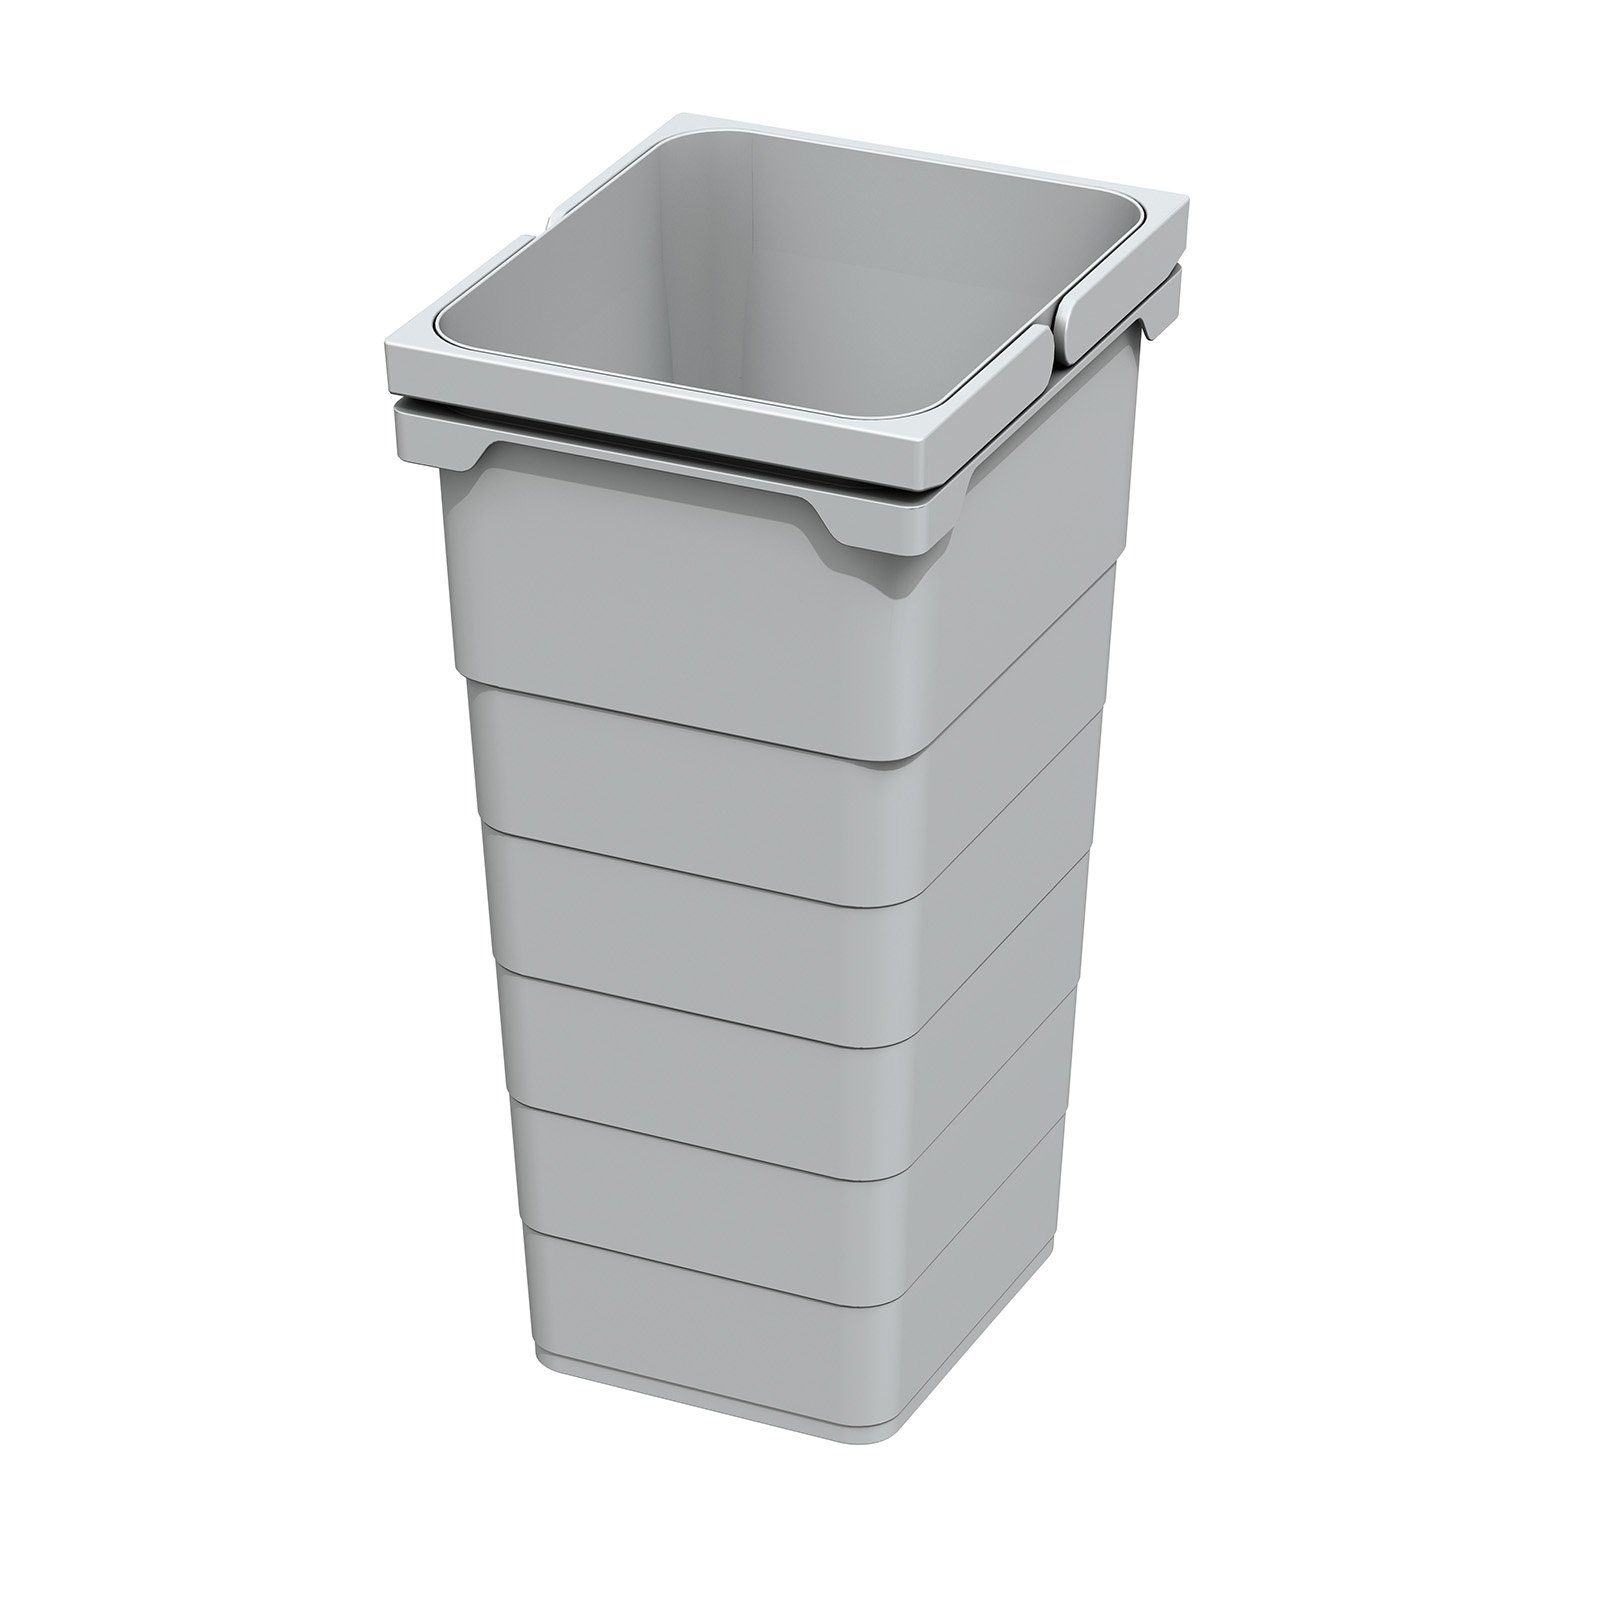 SO-TECH® Mülltrennsystem Ninka Abfalltrennsystem 50 eins2vier Höhe mm mm alugrau, 330 Korpusbreite / L dunkelgrau für 600